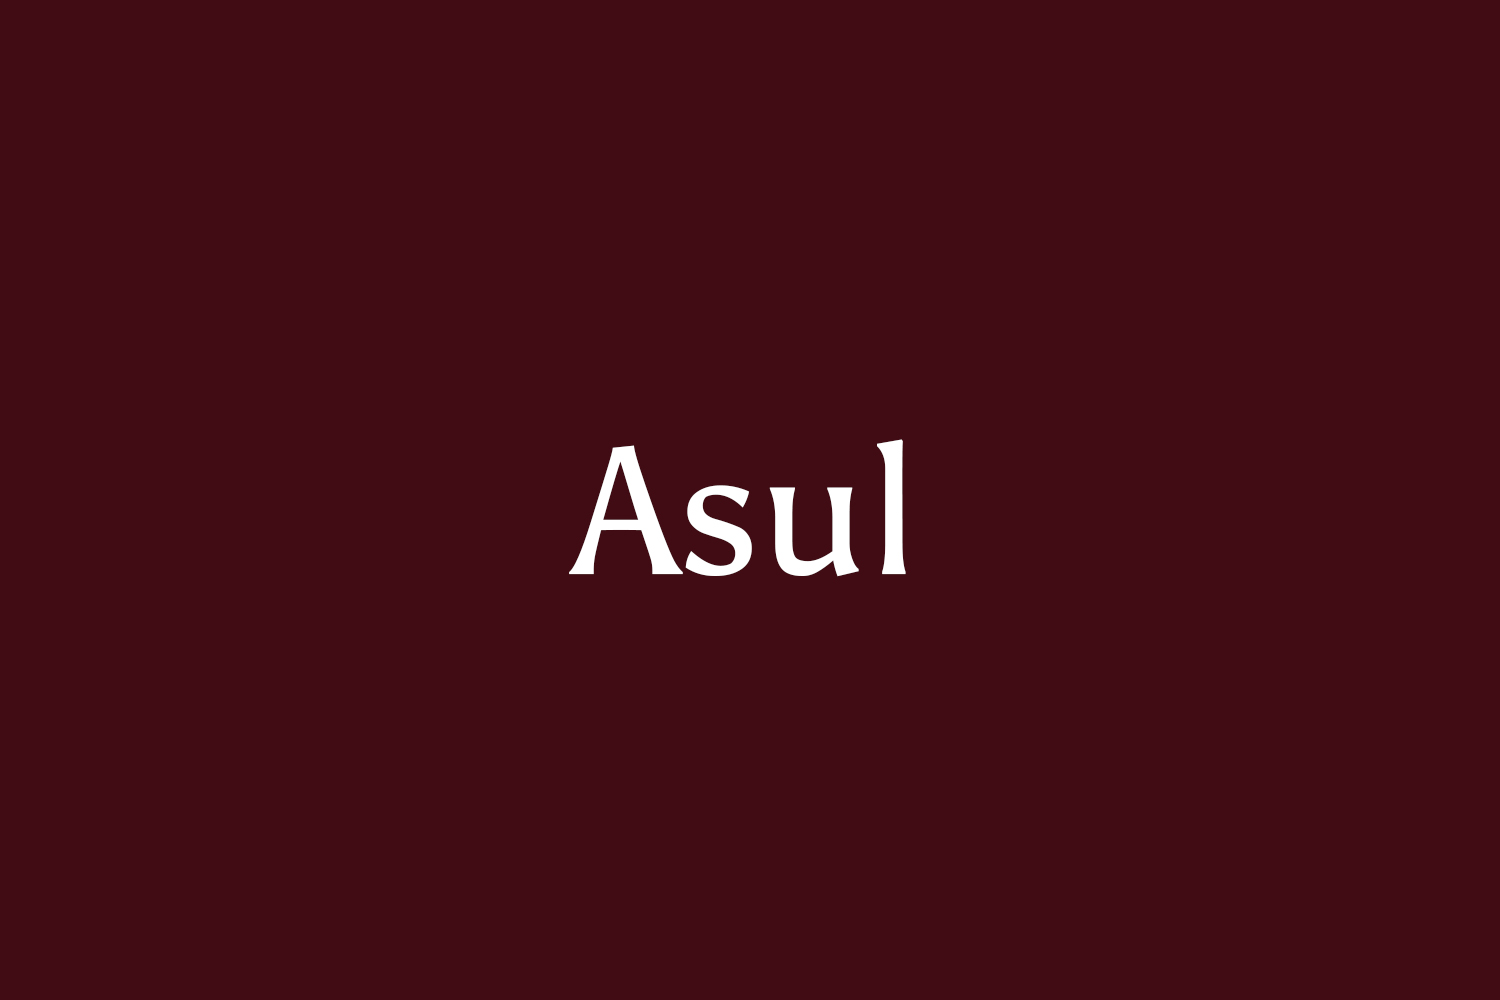 Asul